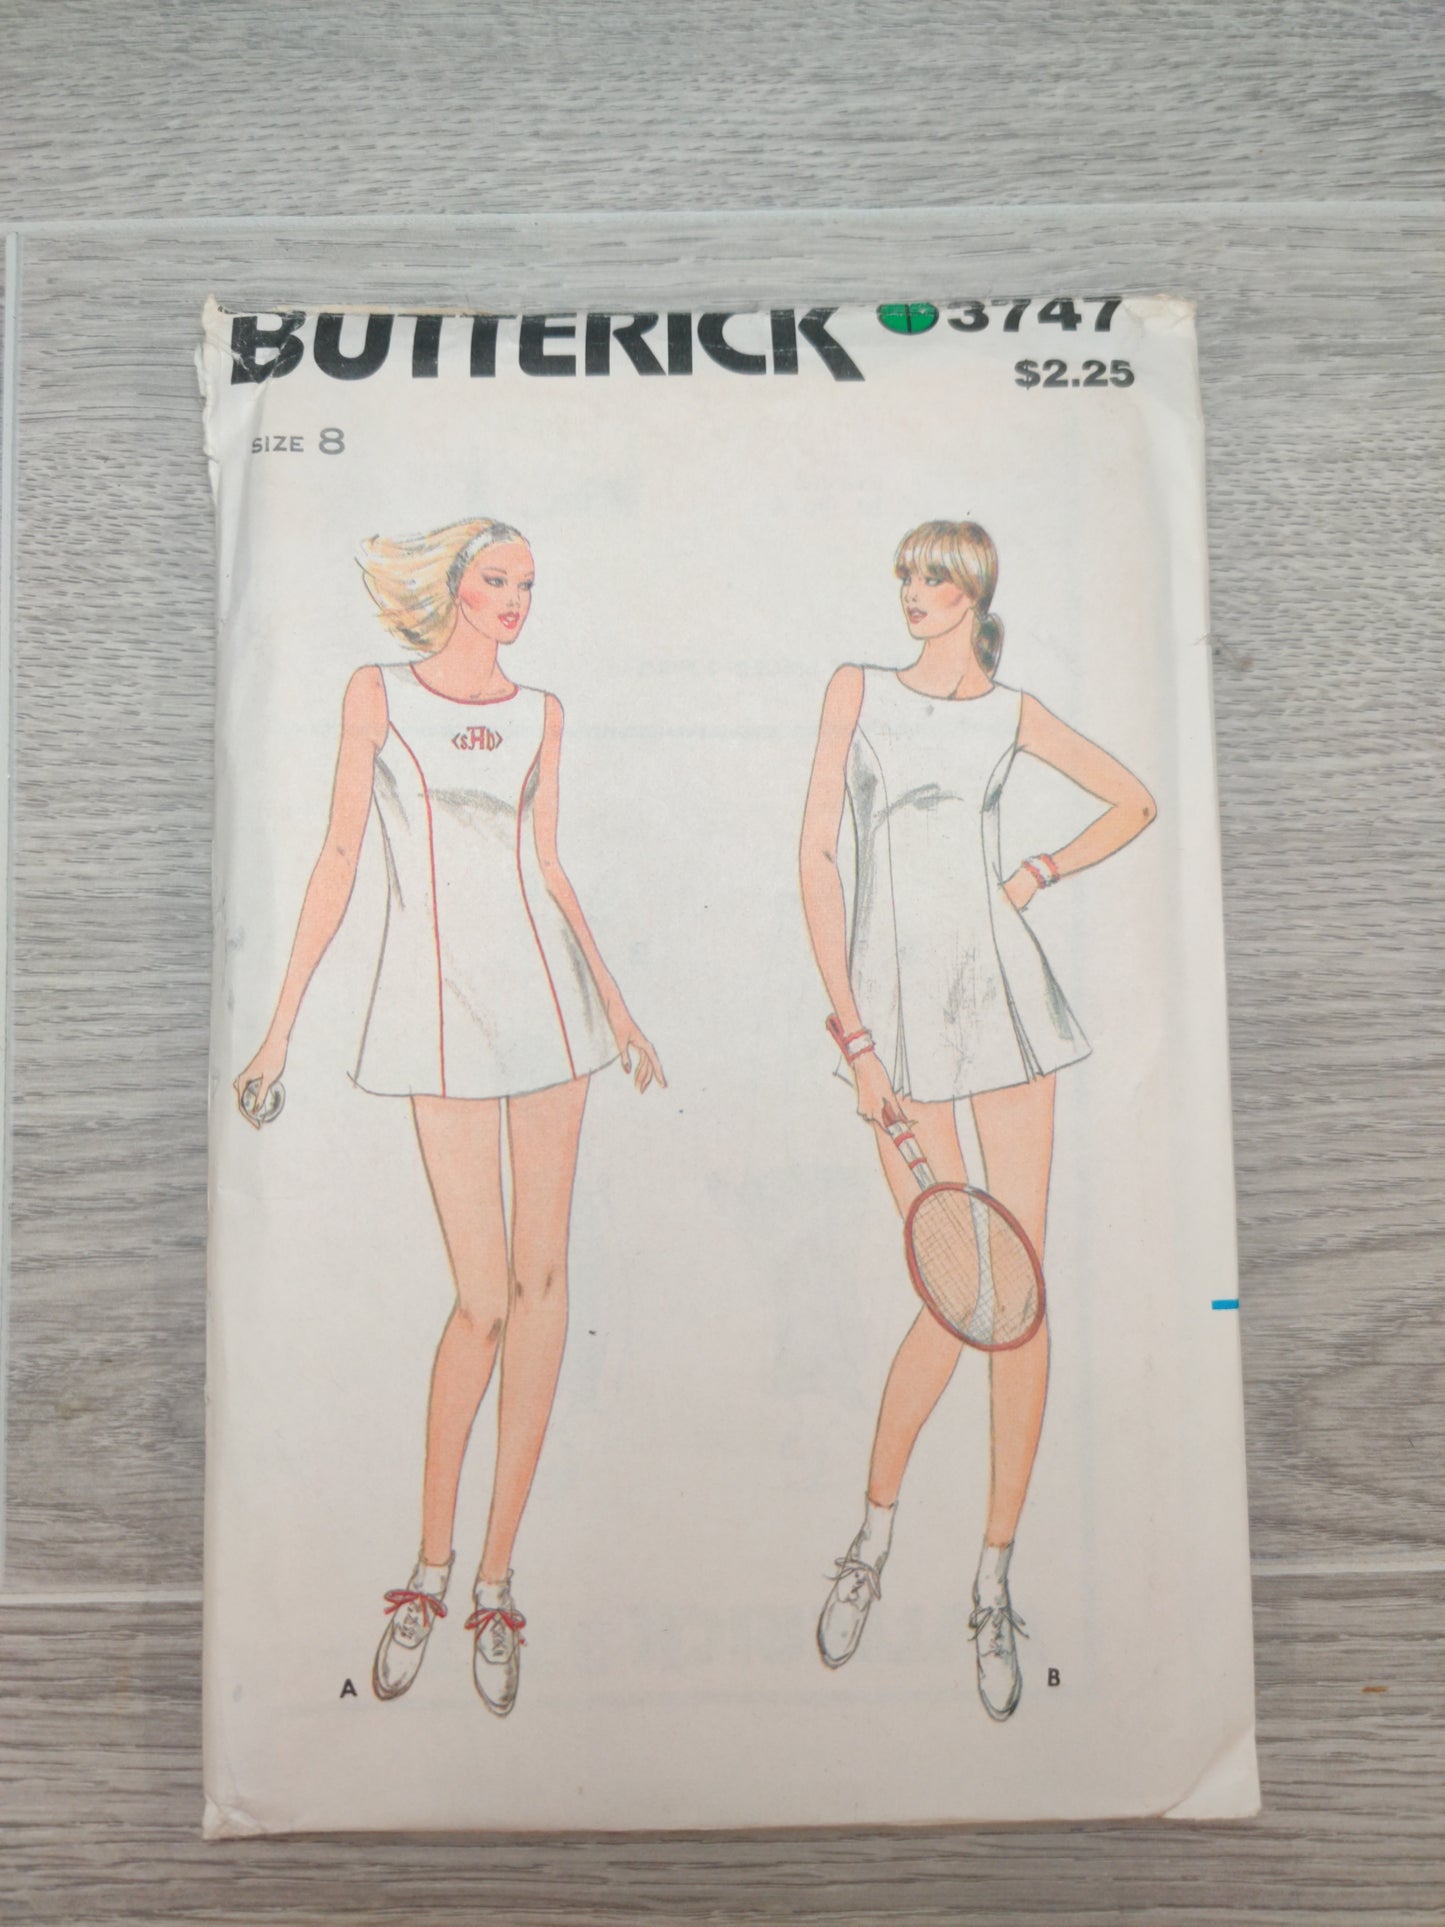 Butterick 3747 Size 8